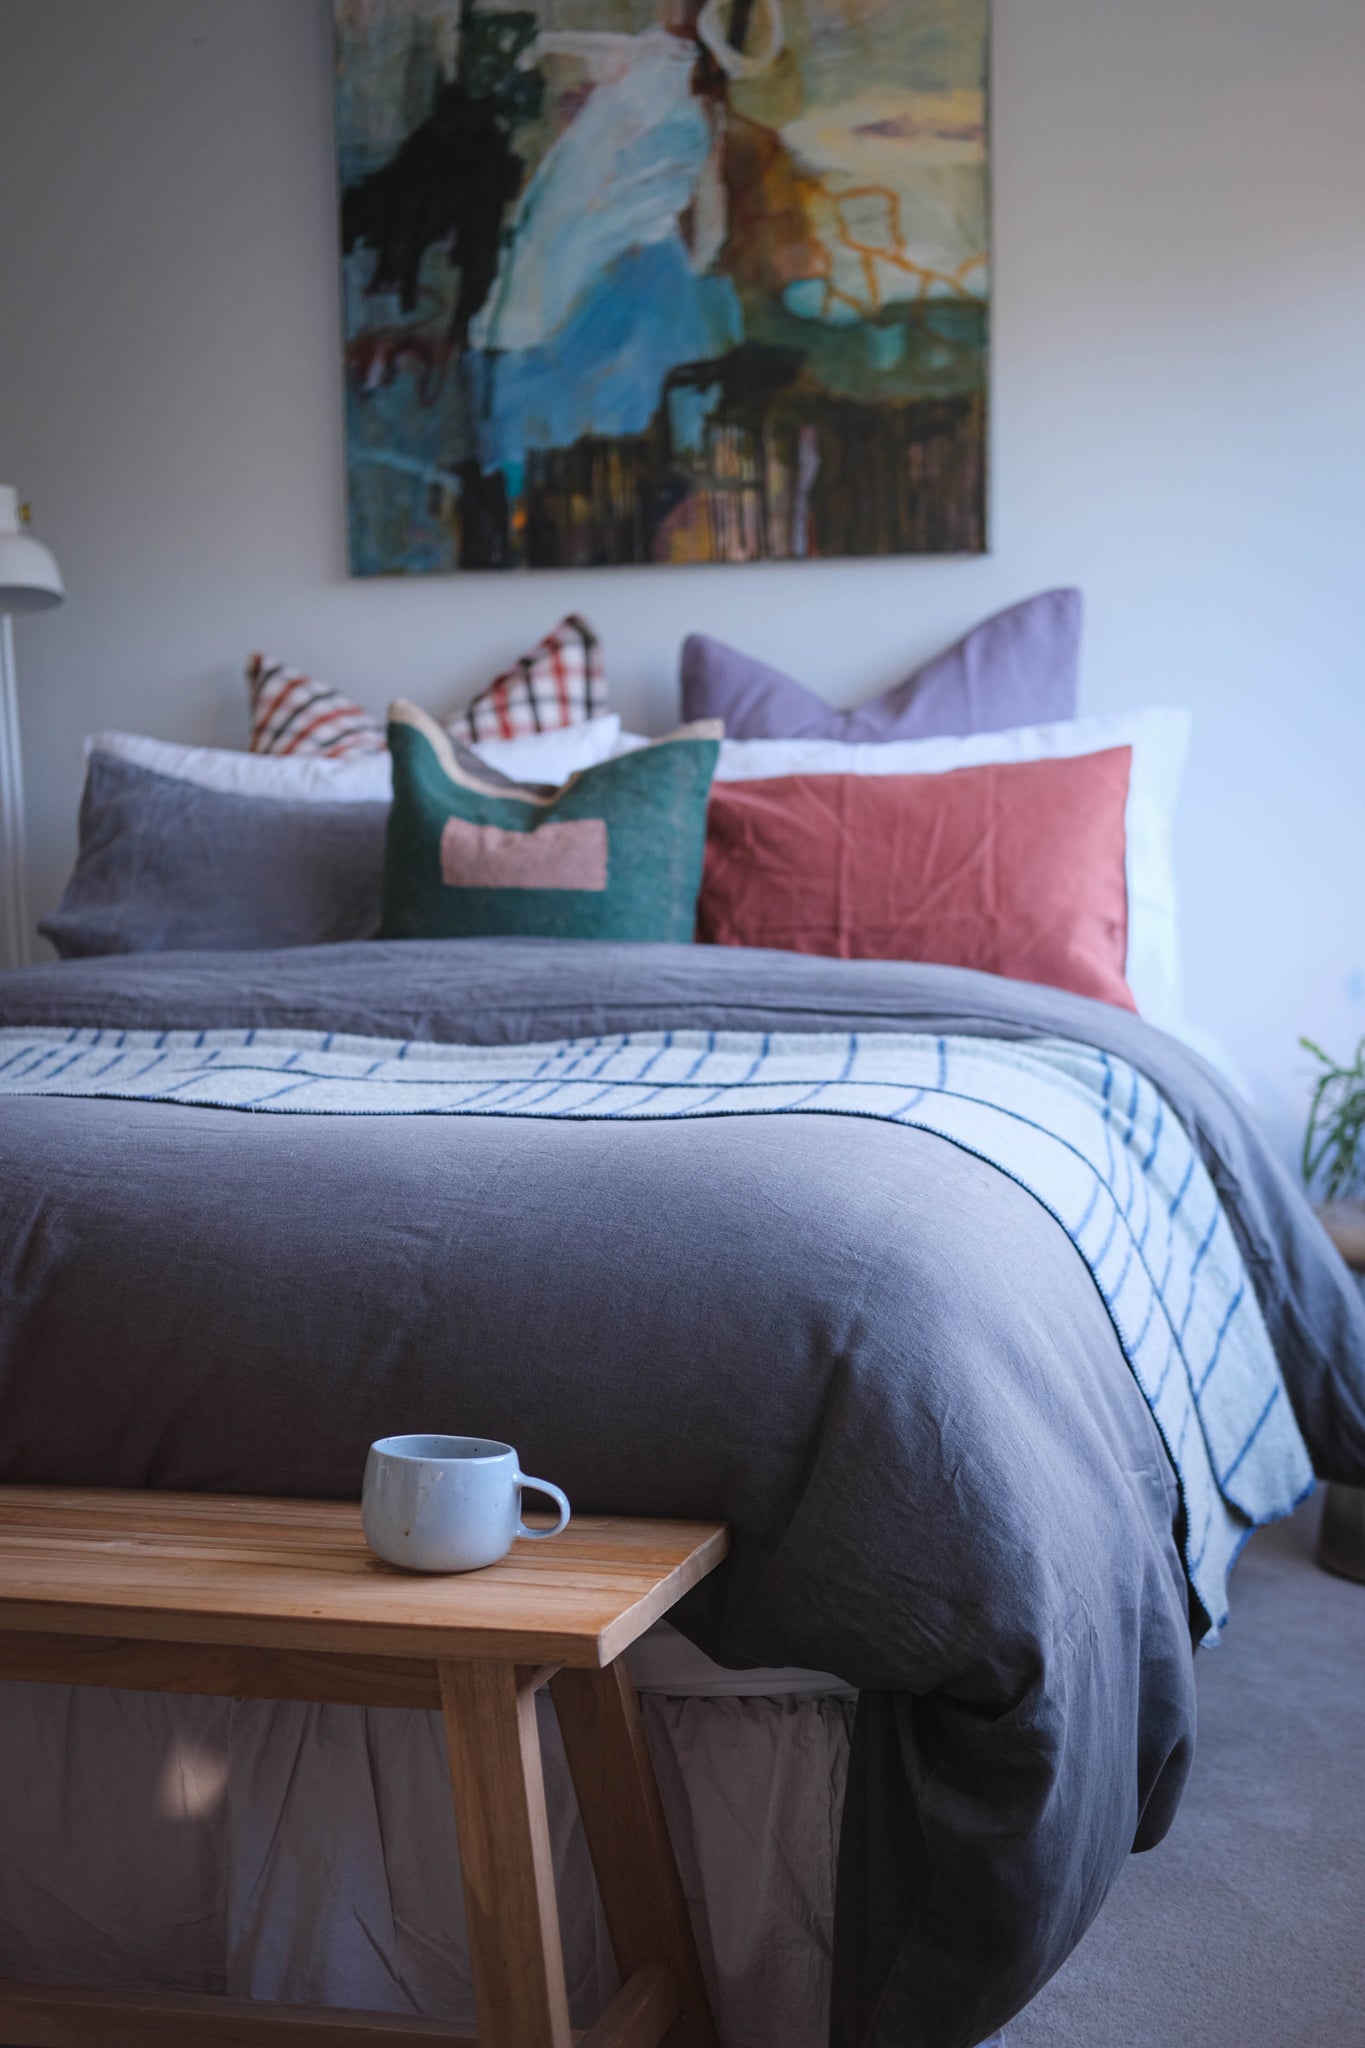 A bedroom setting with a blue handmade coffee mug by Palinopsia 